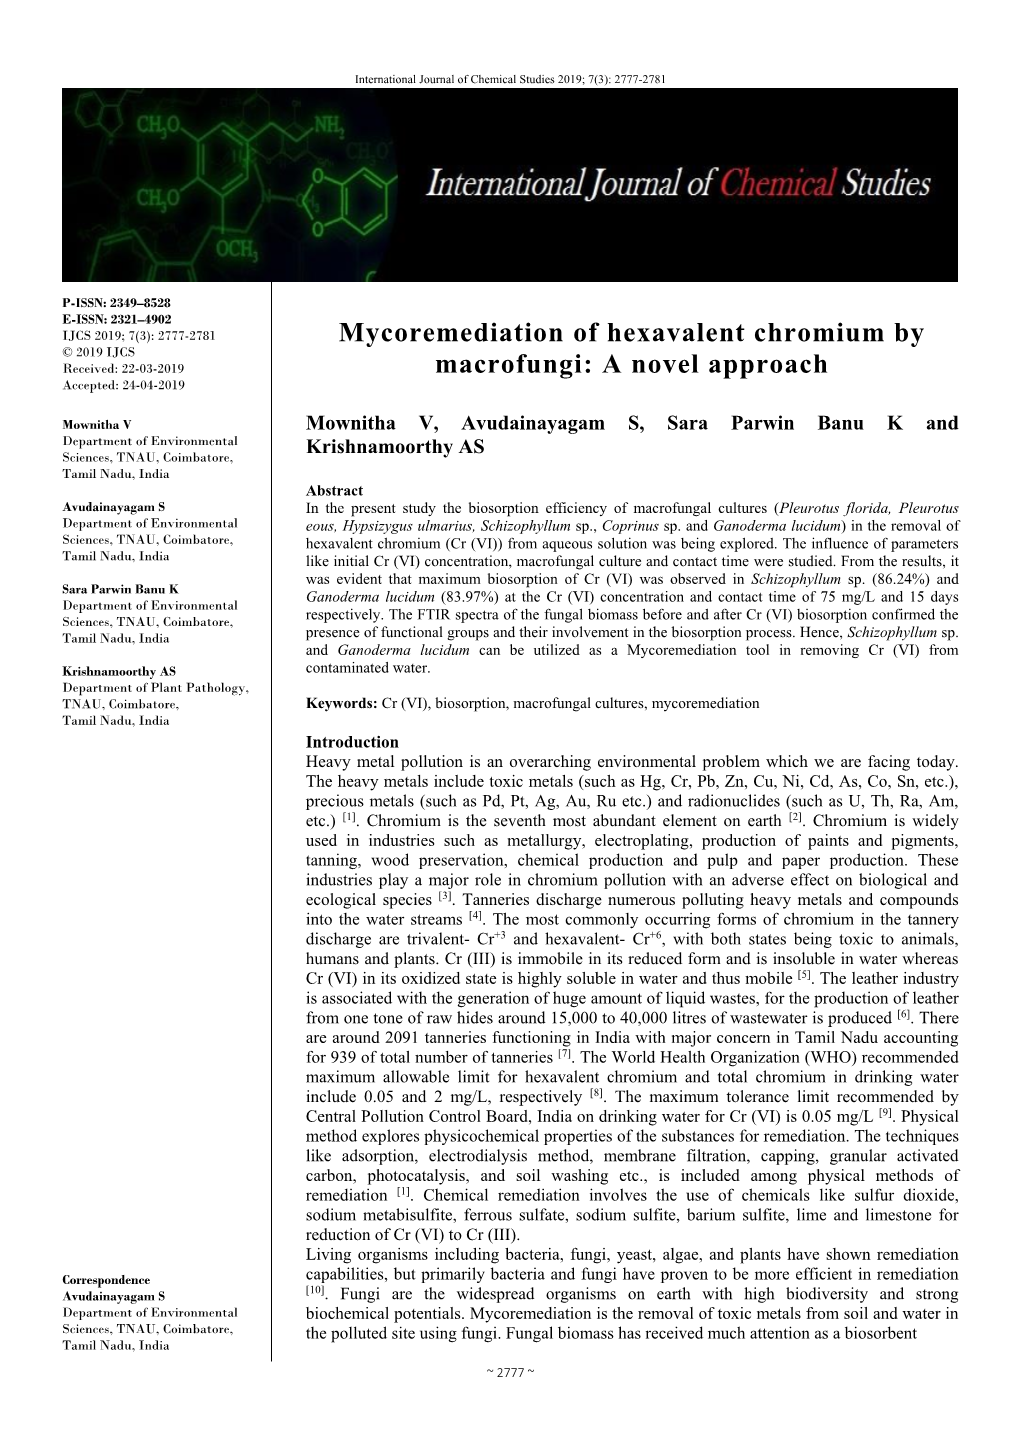 Mycoremediation of Hexavalent Chromium by Macrofungi